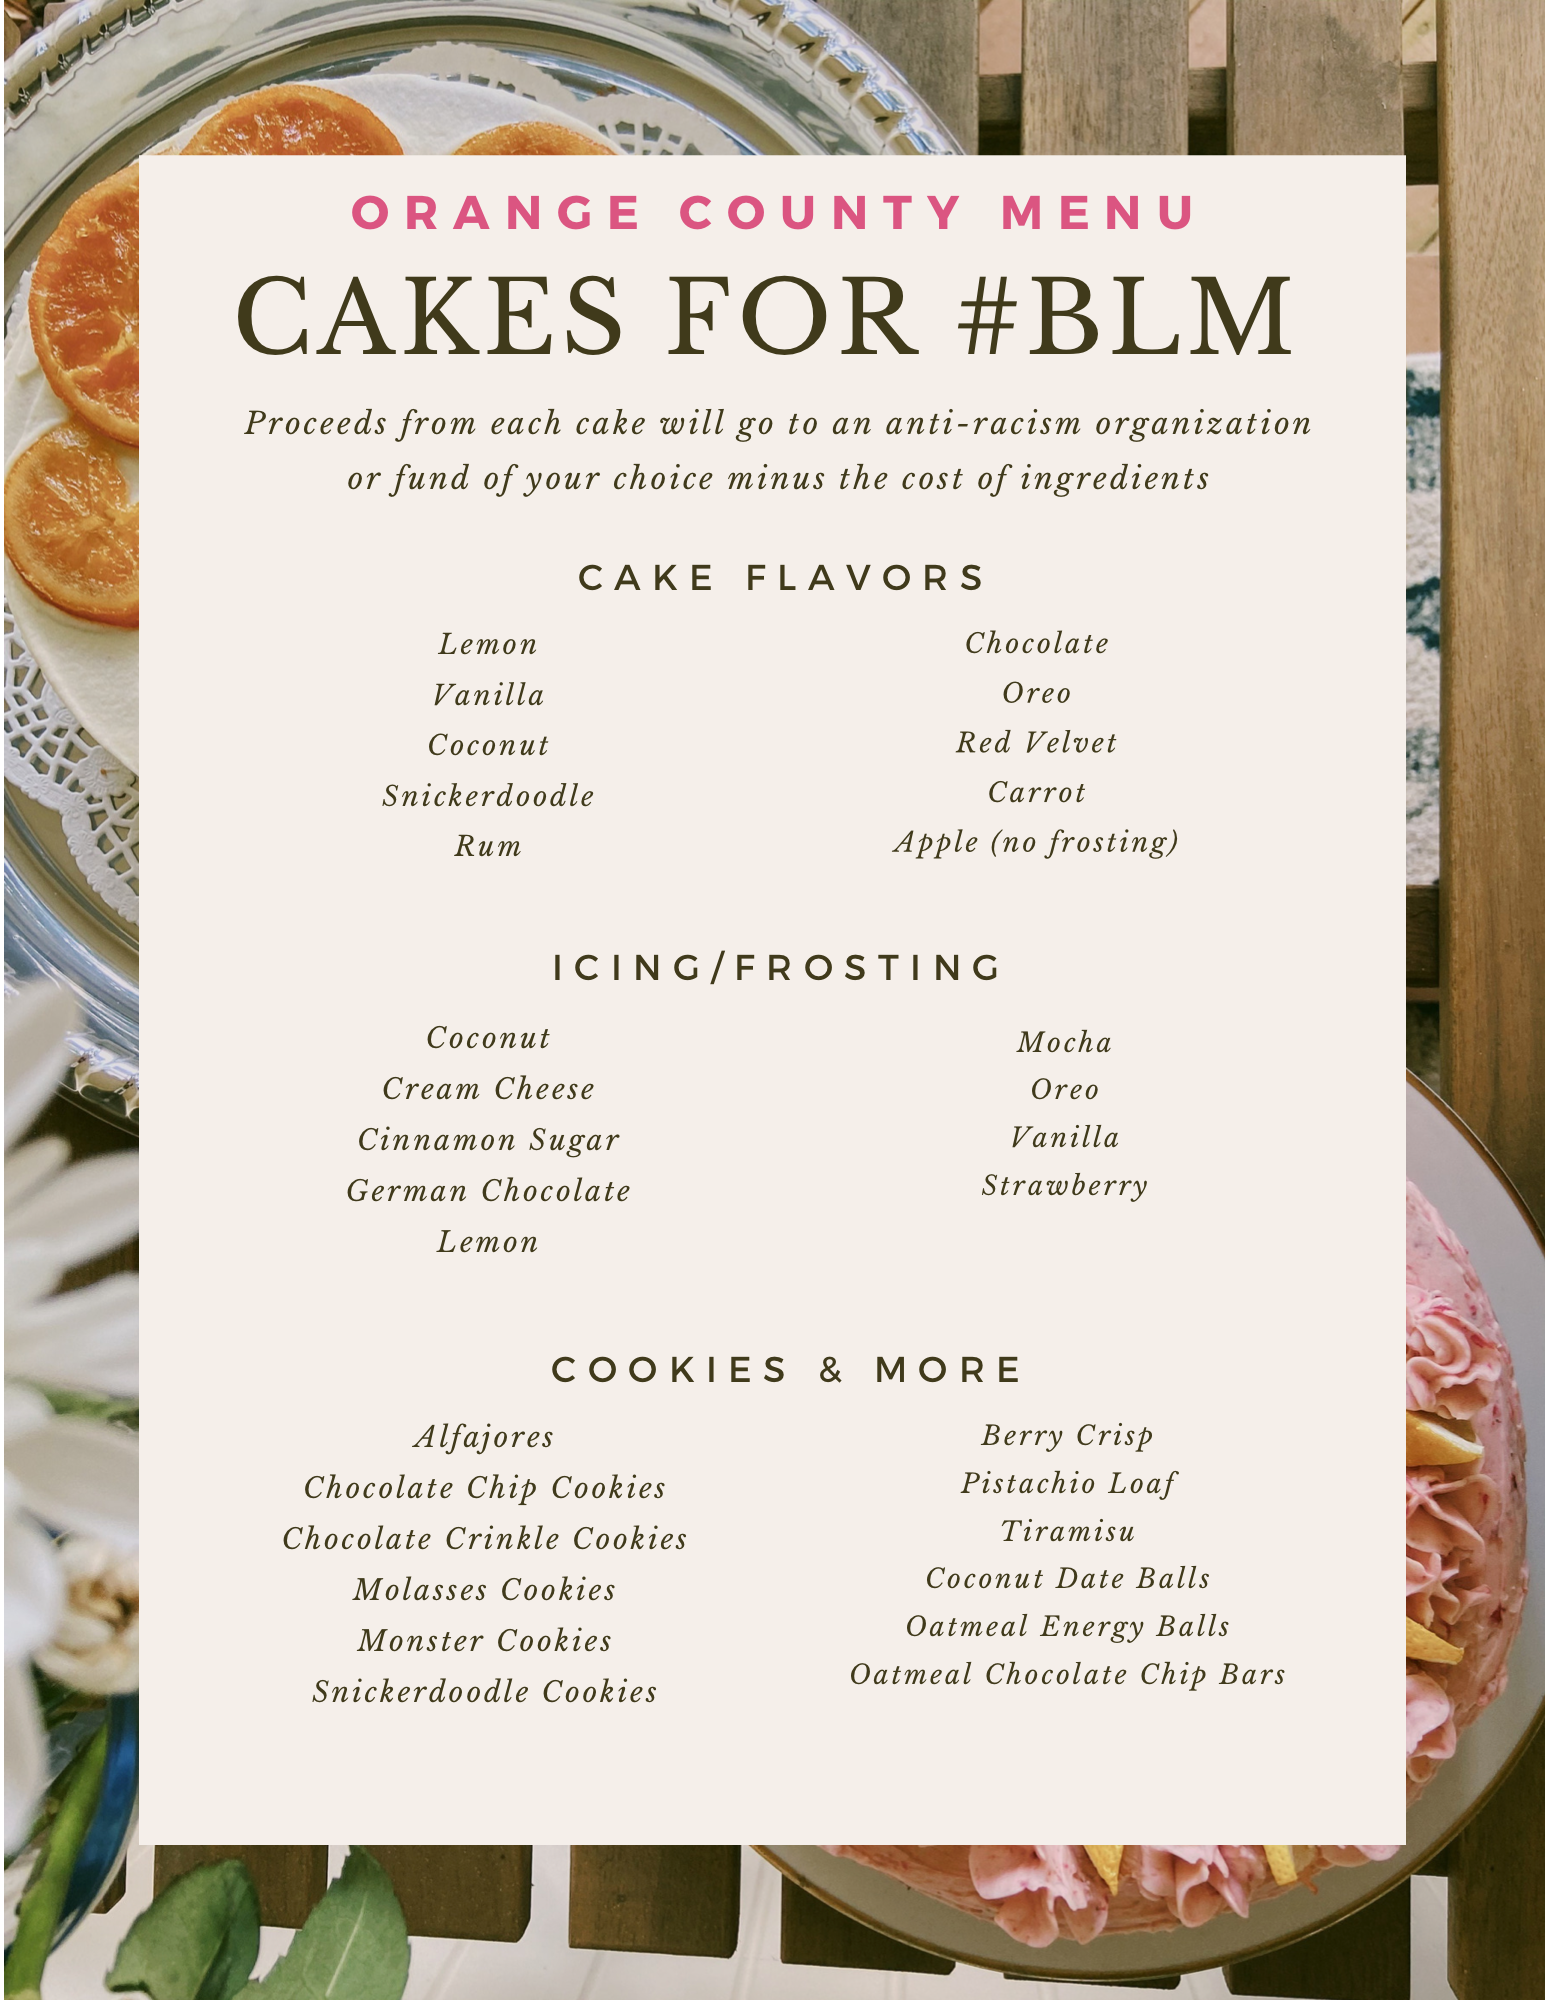 Cakes for BLM - Orange County, California menu